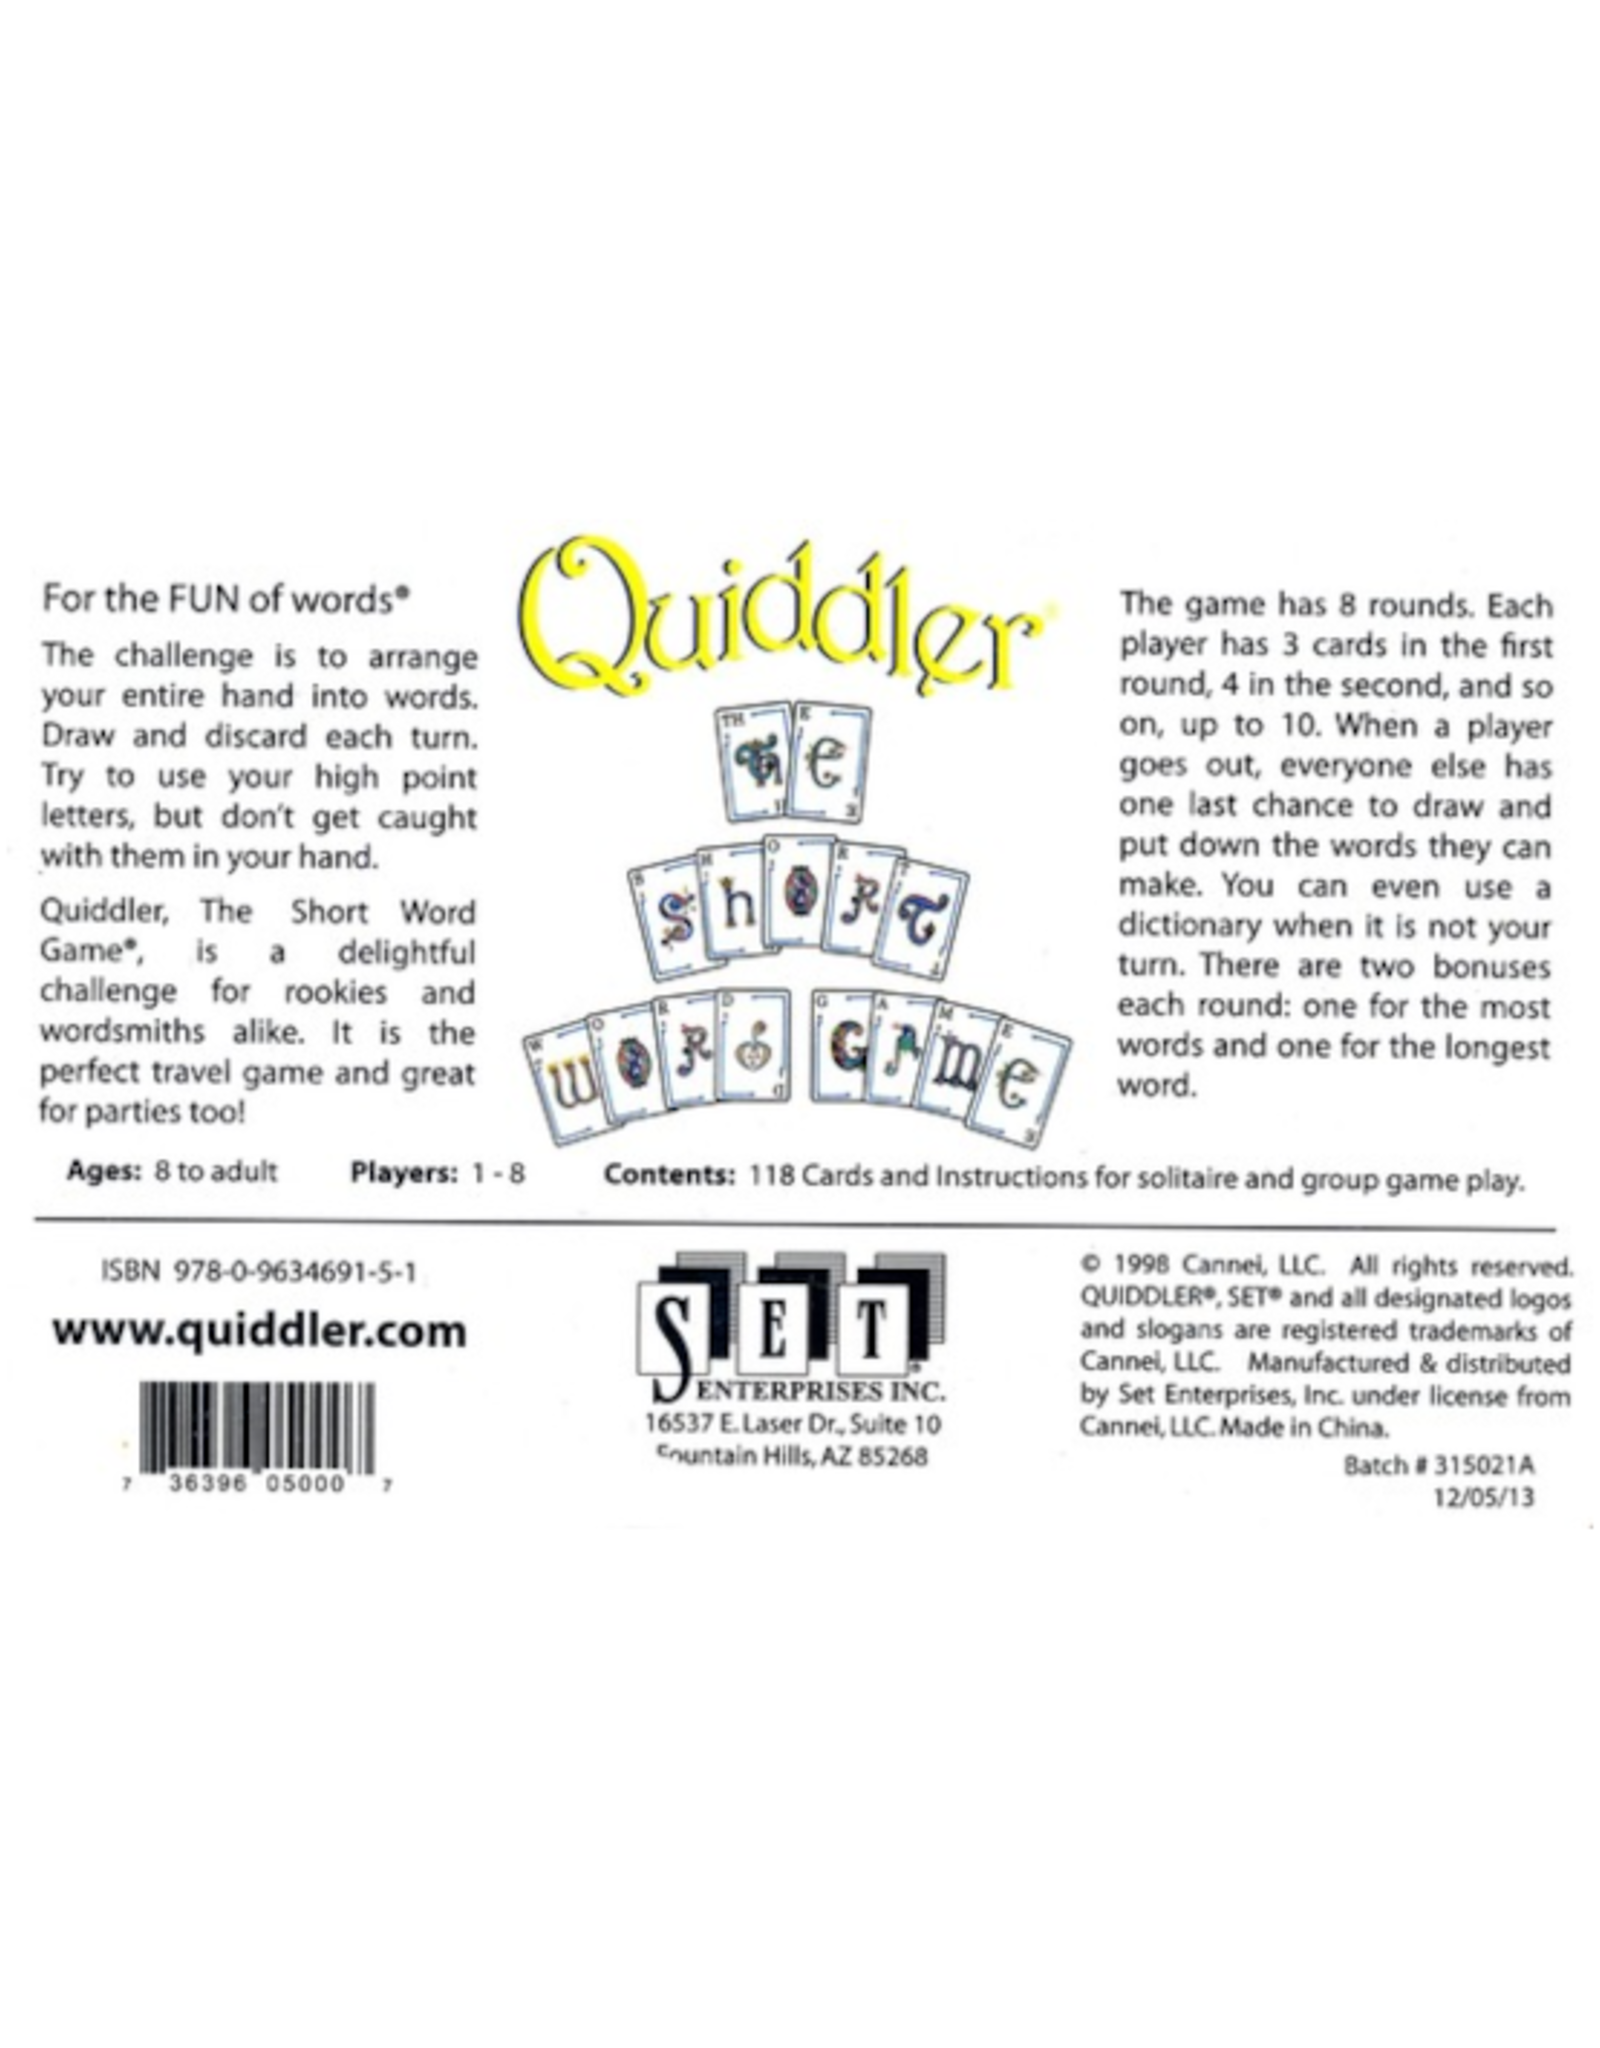 Set Enterprises - Quiddler